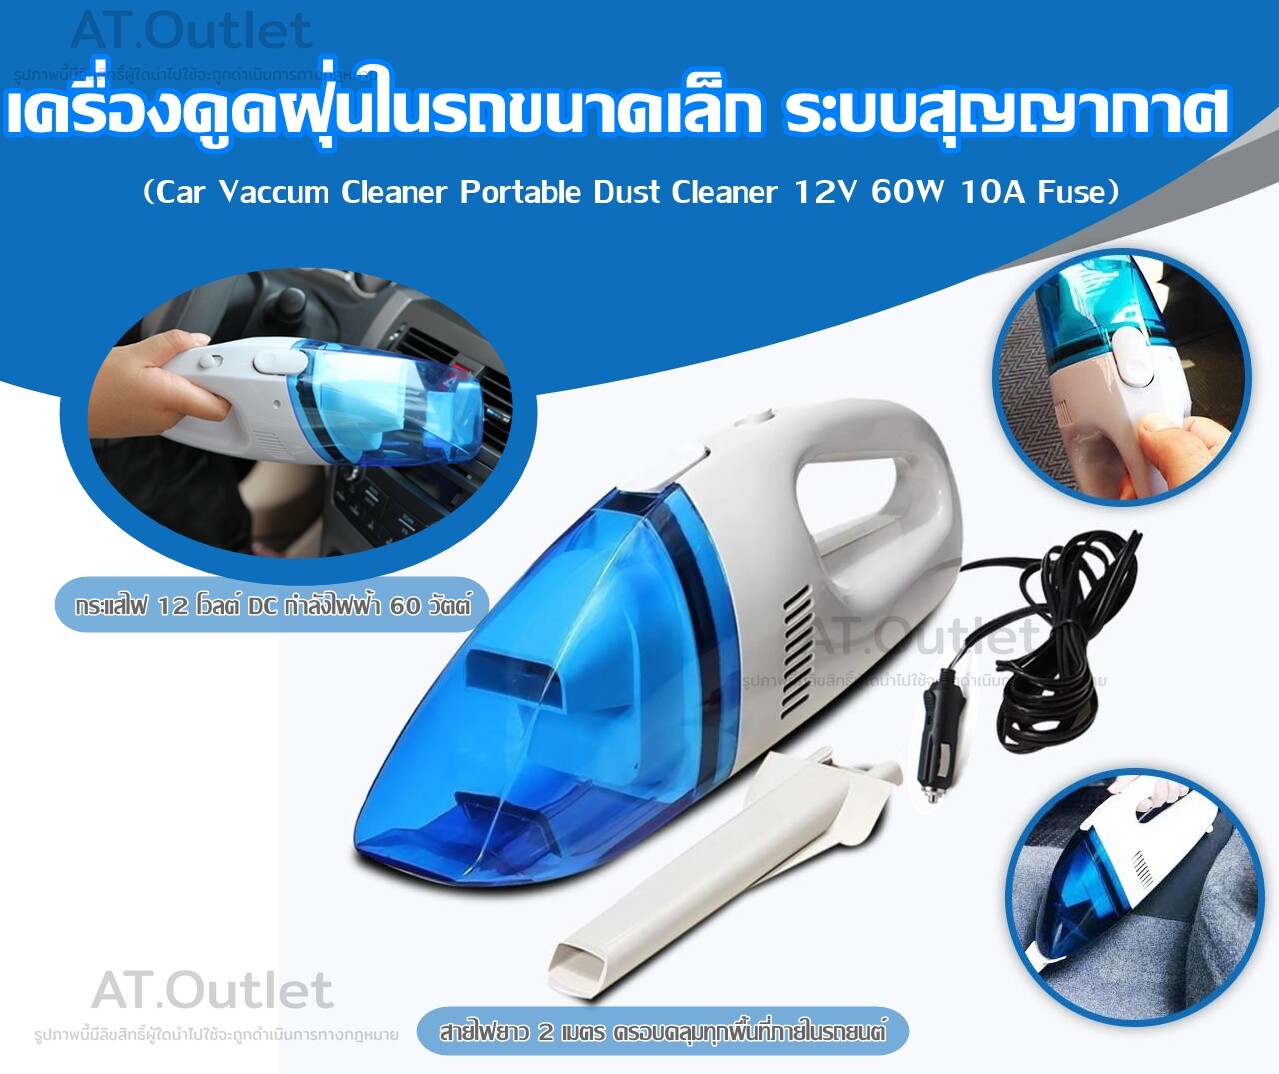 AT.outletเครื่องดูดฝุ่นในรถยนต์ เครื่องดูดฝุ่นในรถขนาดเล็ก ระบบสุญญากาศ Car Vaccum Cleaner Portable Dust Cleaner 12V 60W